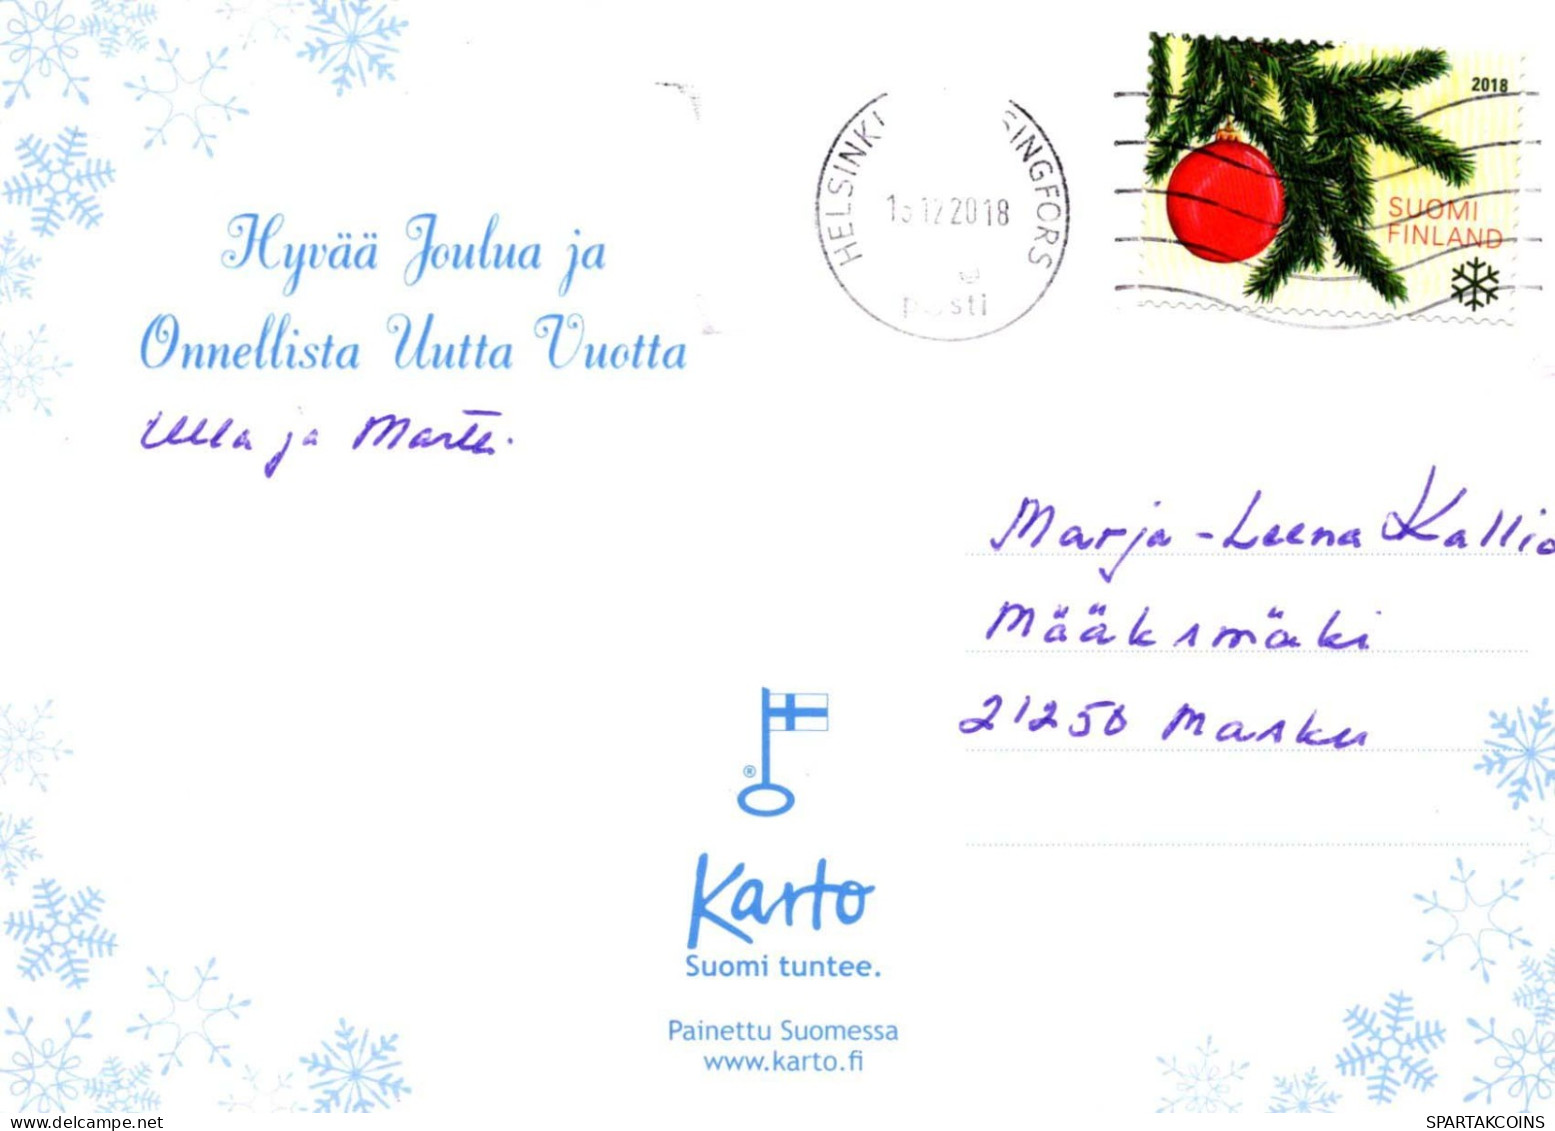 Feliz Año Navidad Vintage Tarjeta Postal CPSM #PBN086.A - Neujahr